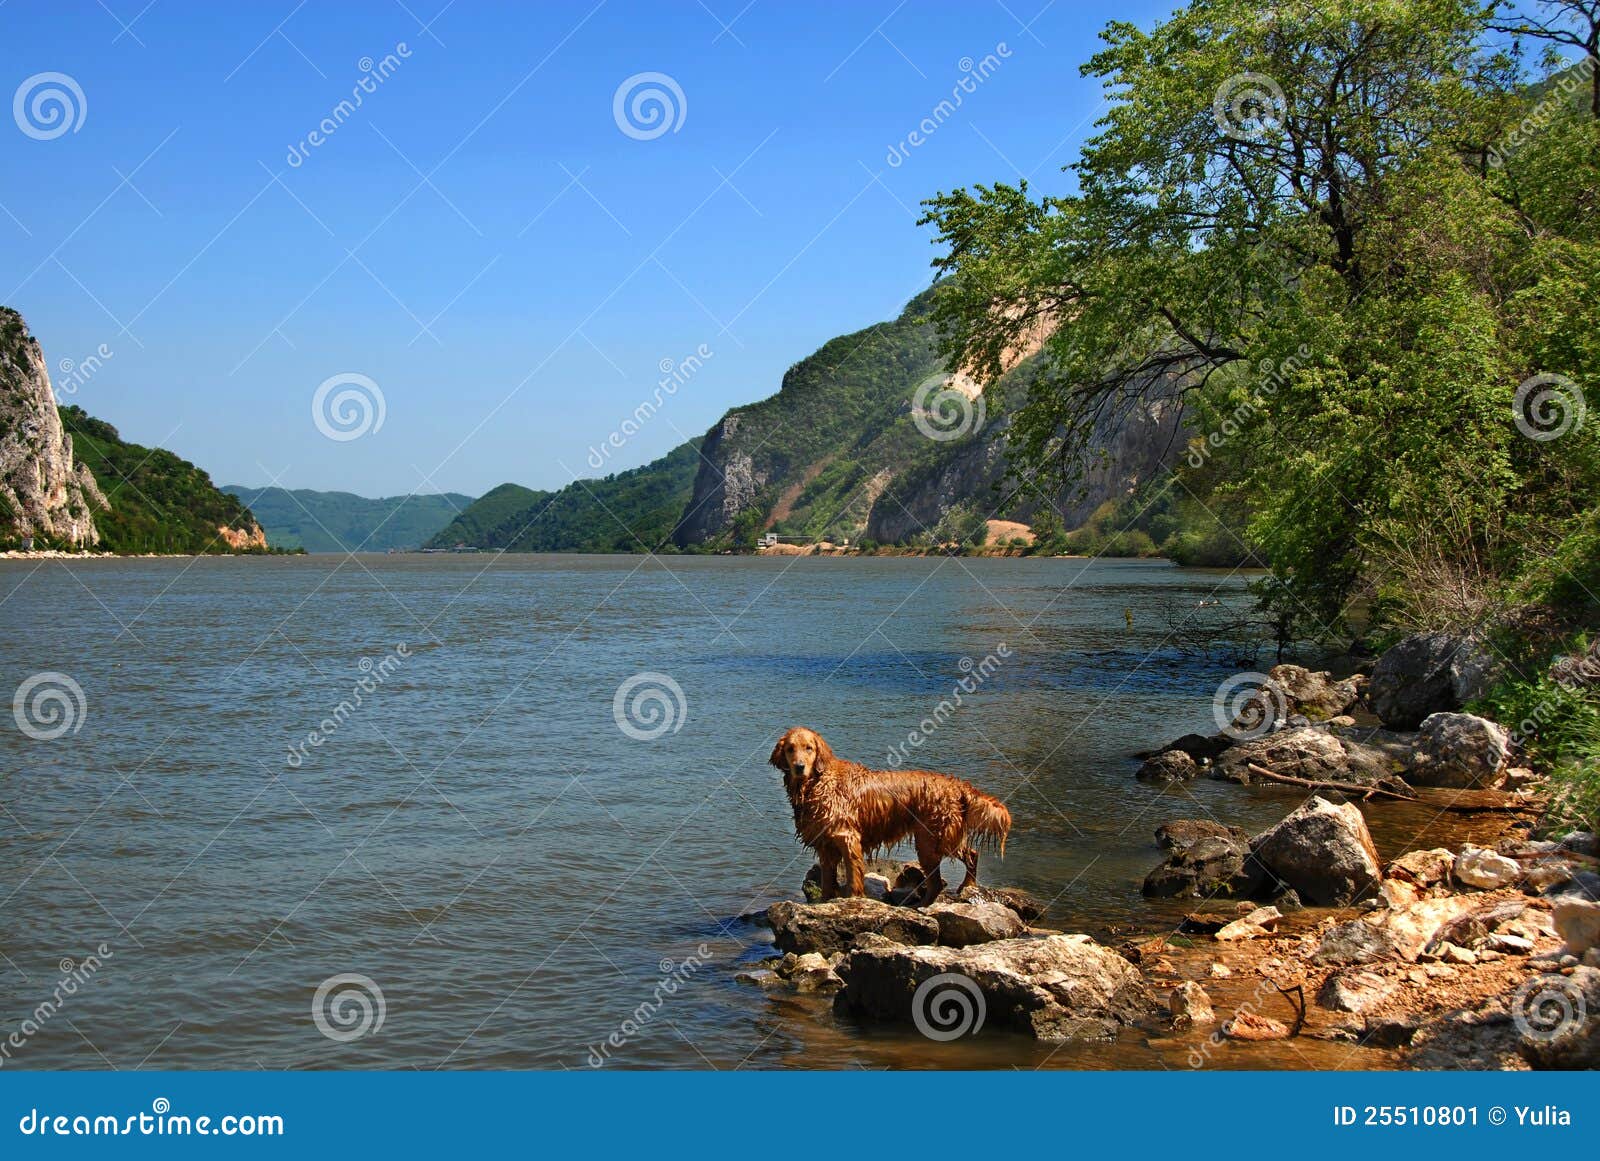 dog on danube riverbank